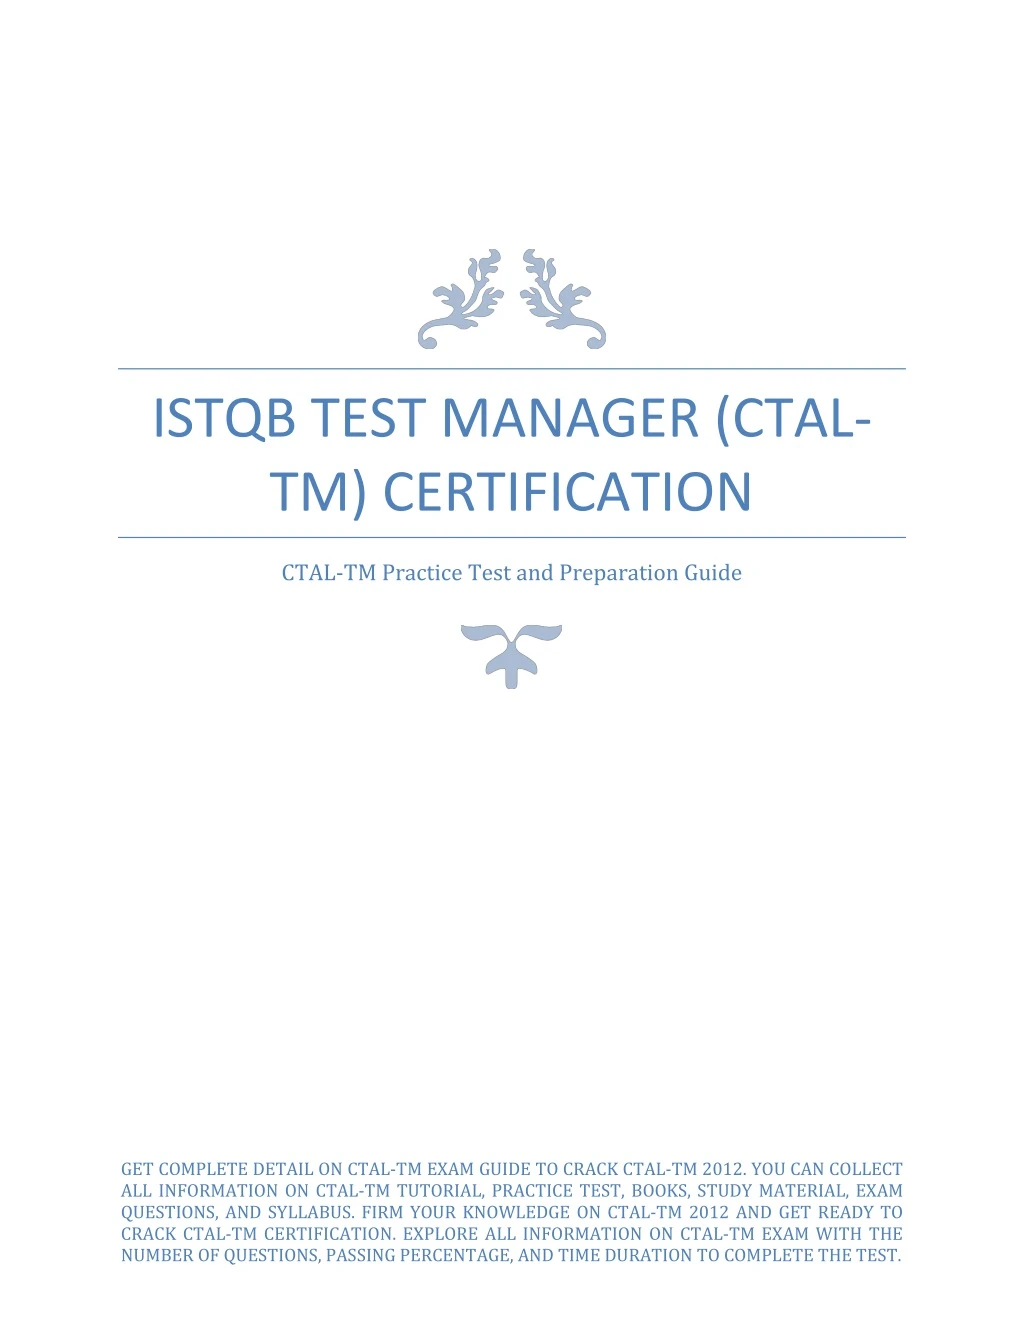 istqb test manager ctal tm certification